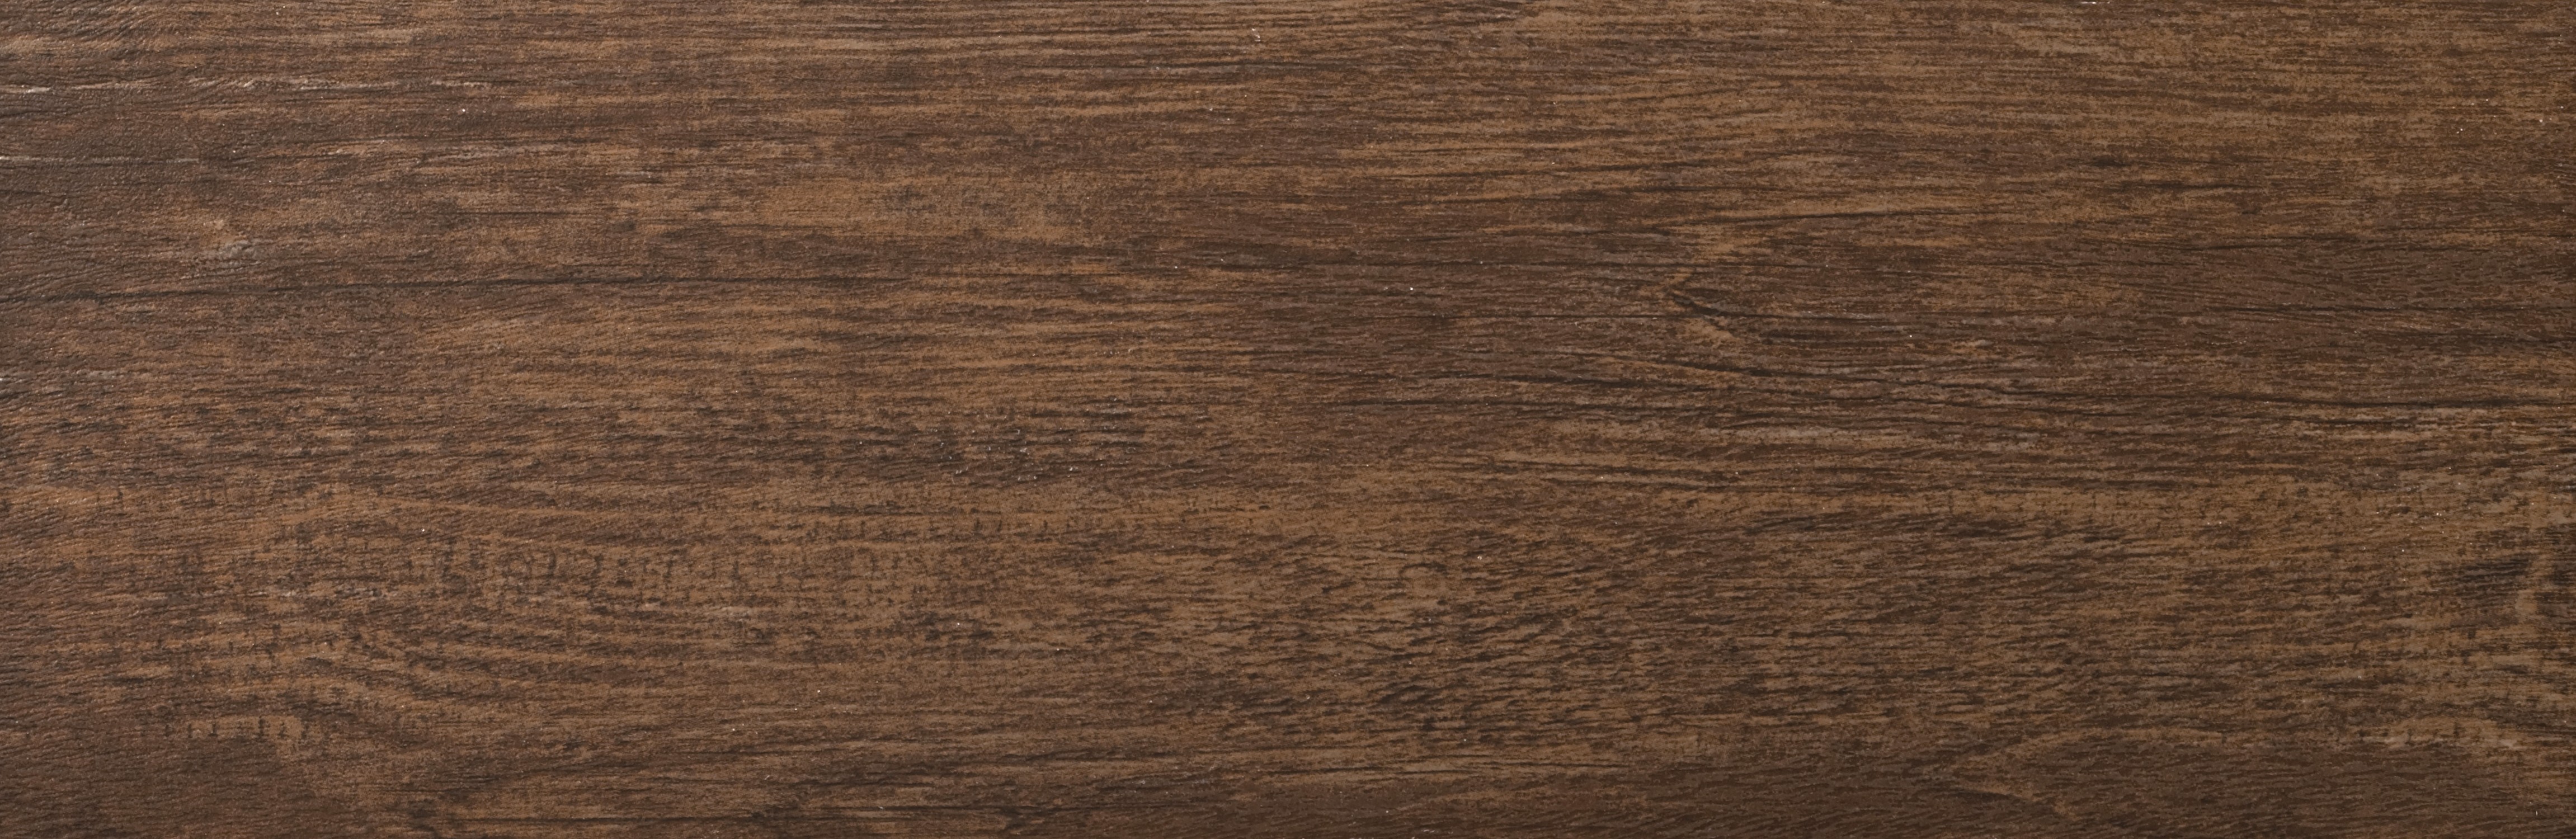 Walnut Wood Texture Background